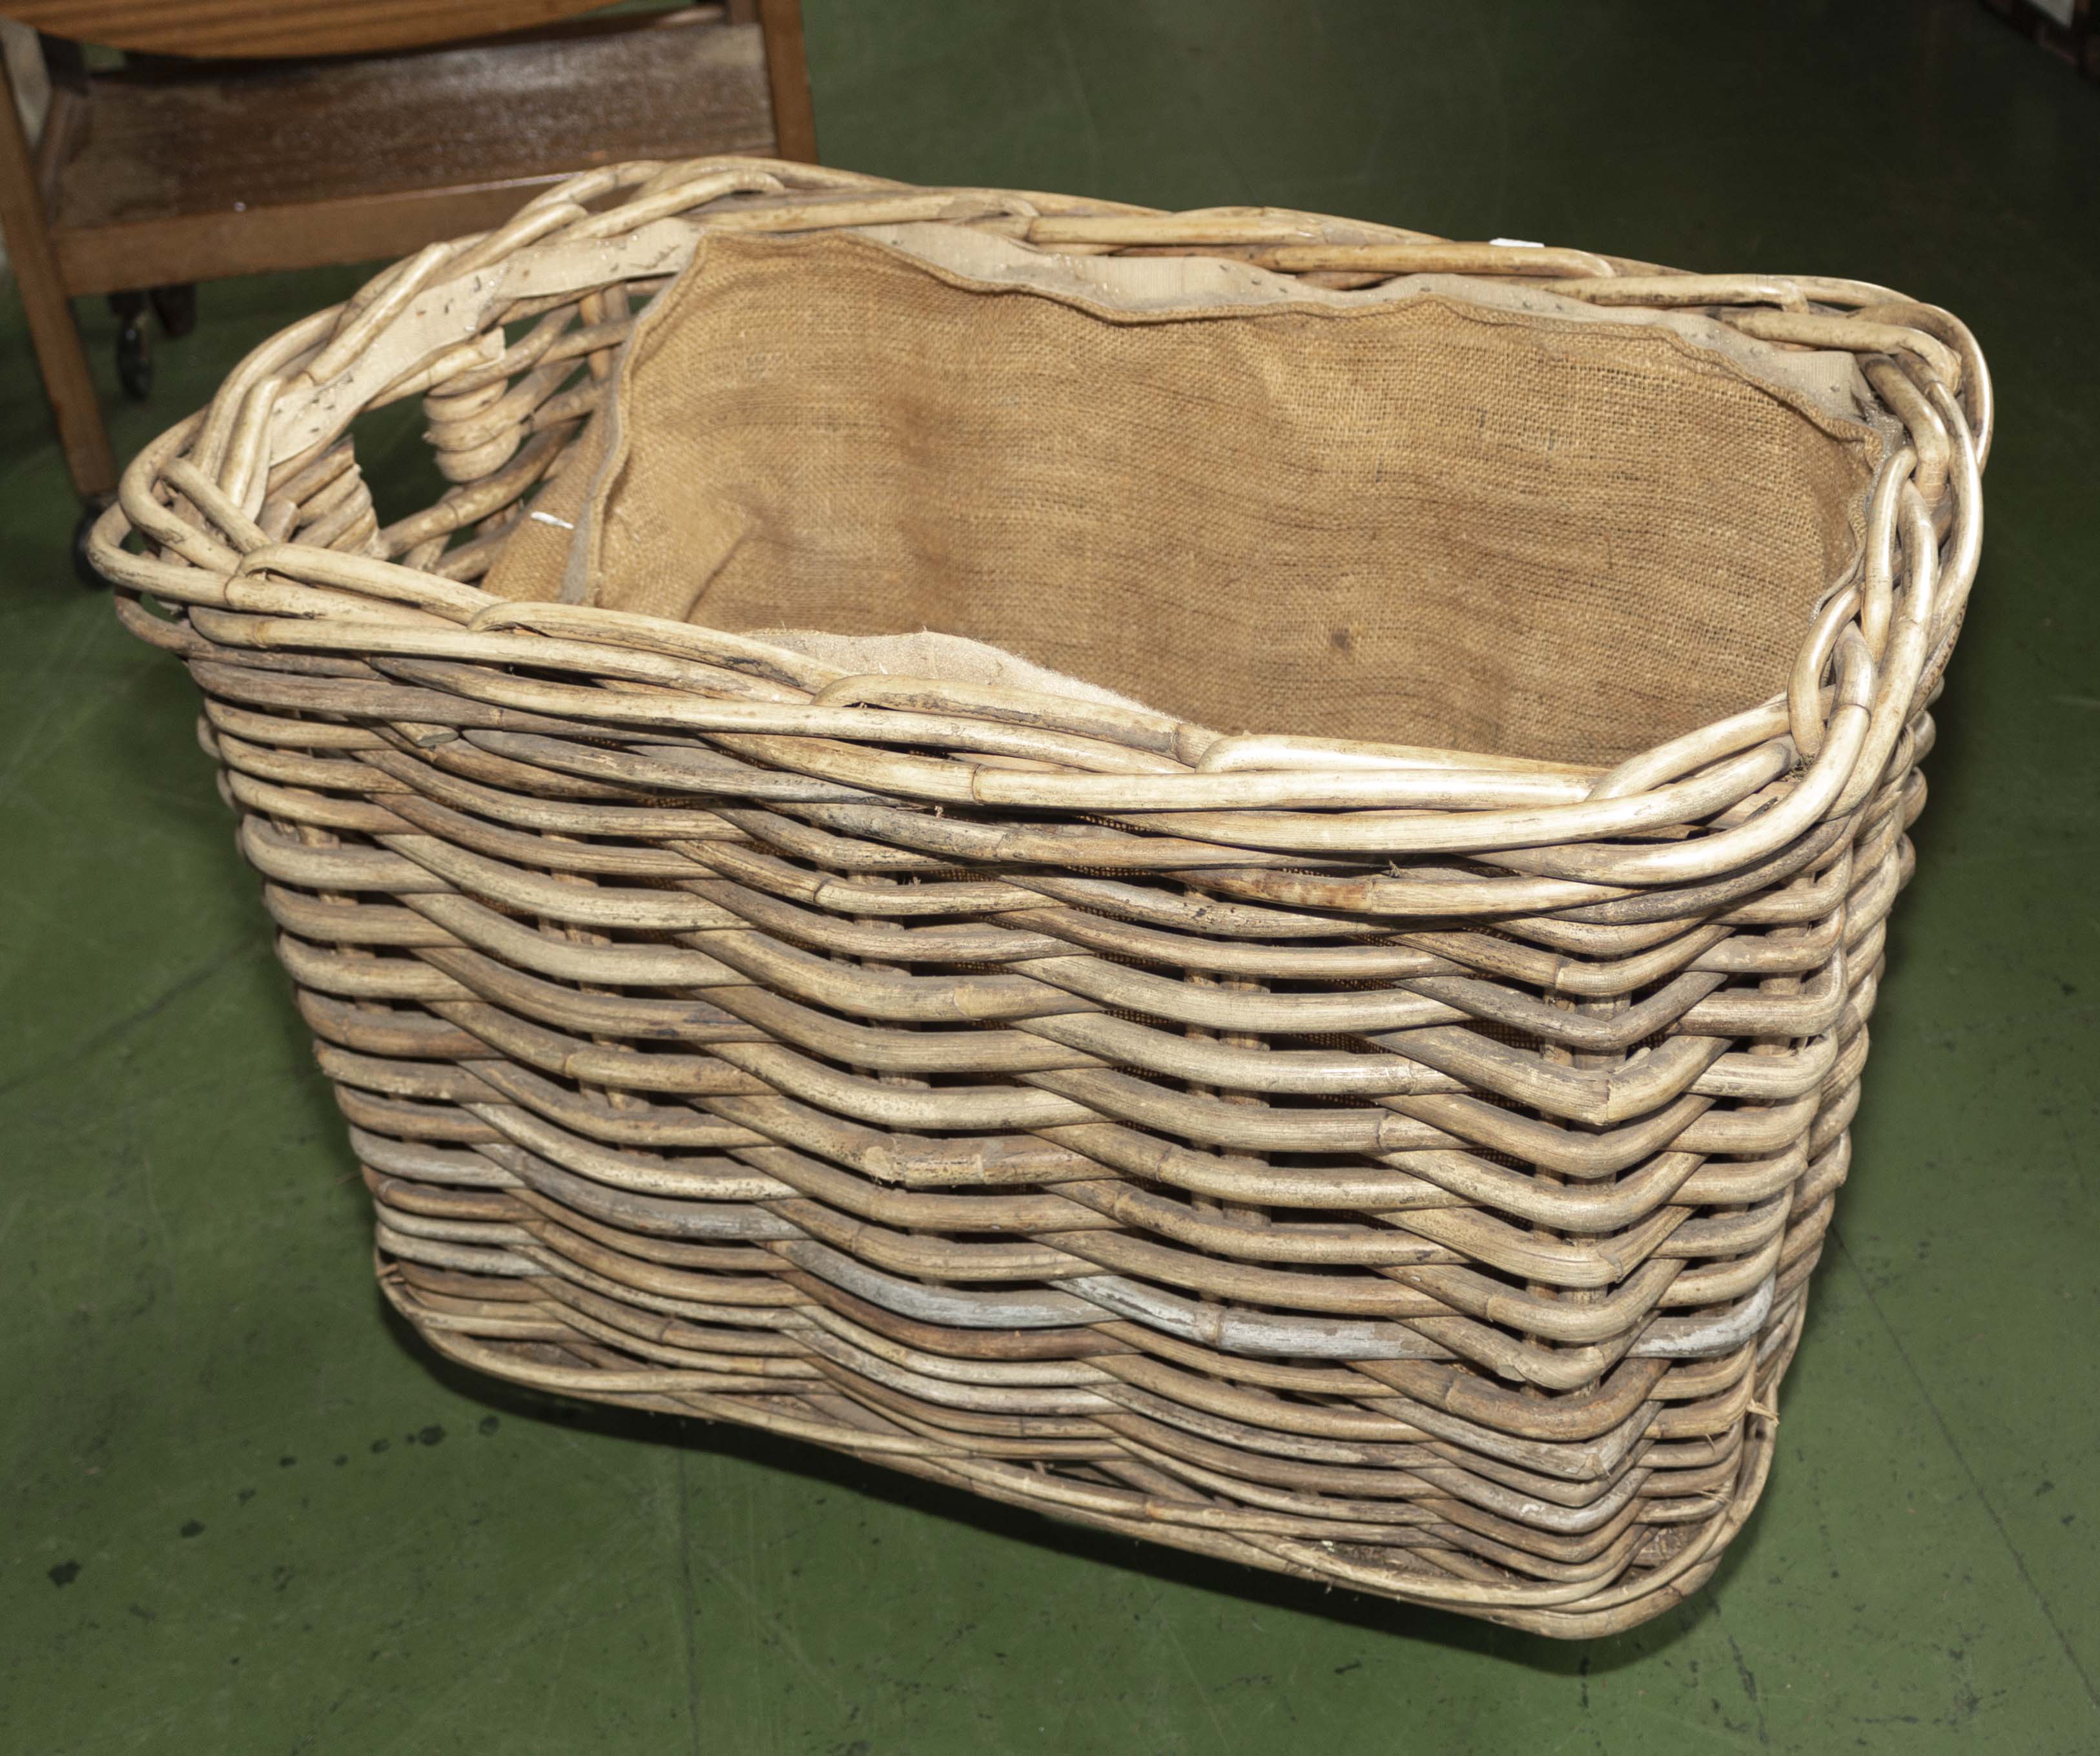 A log basket